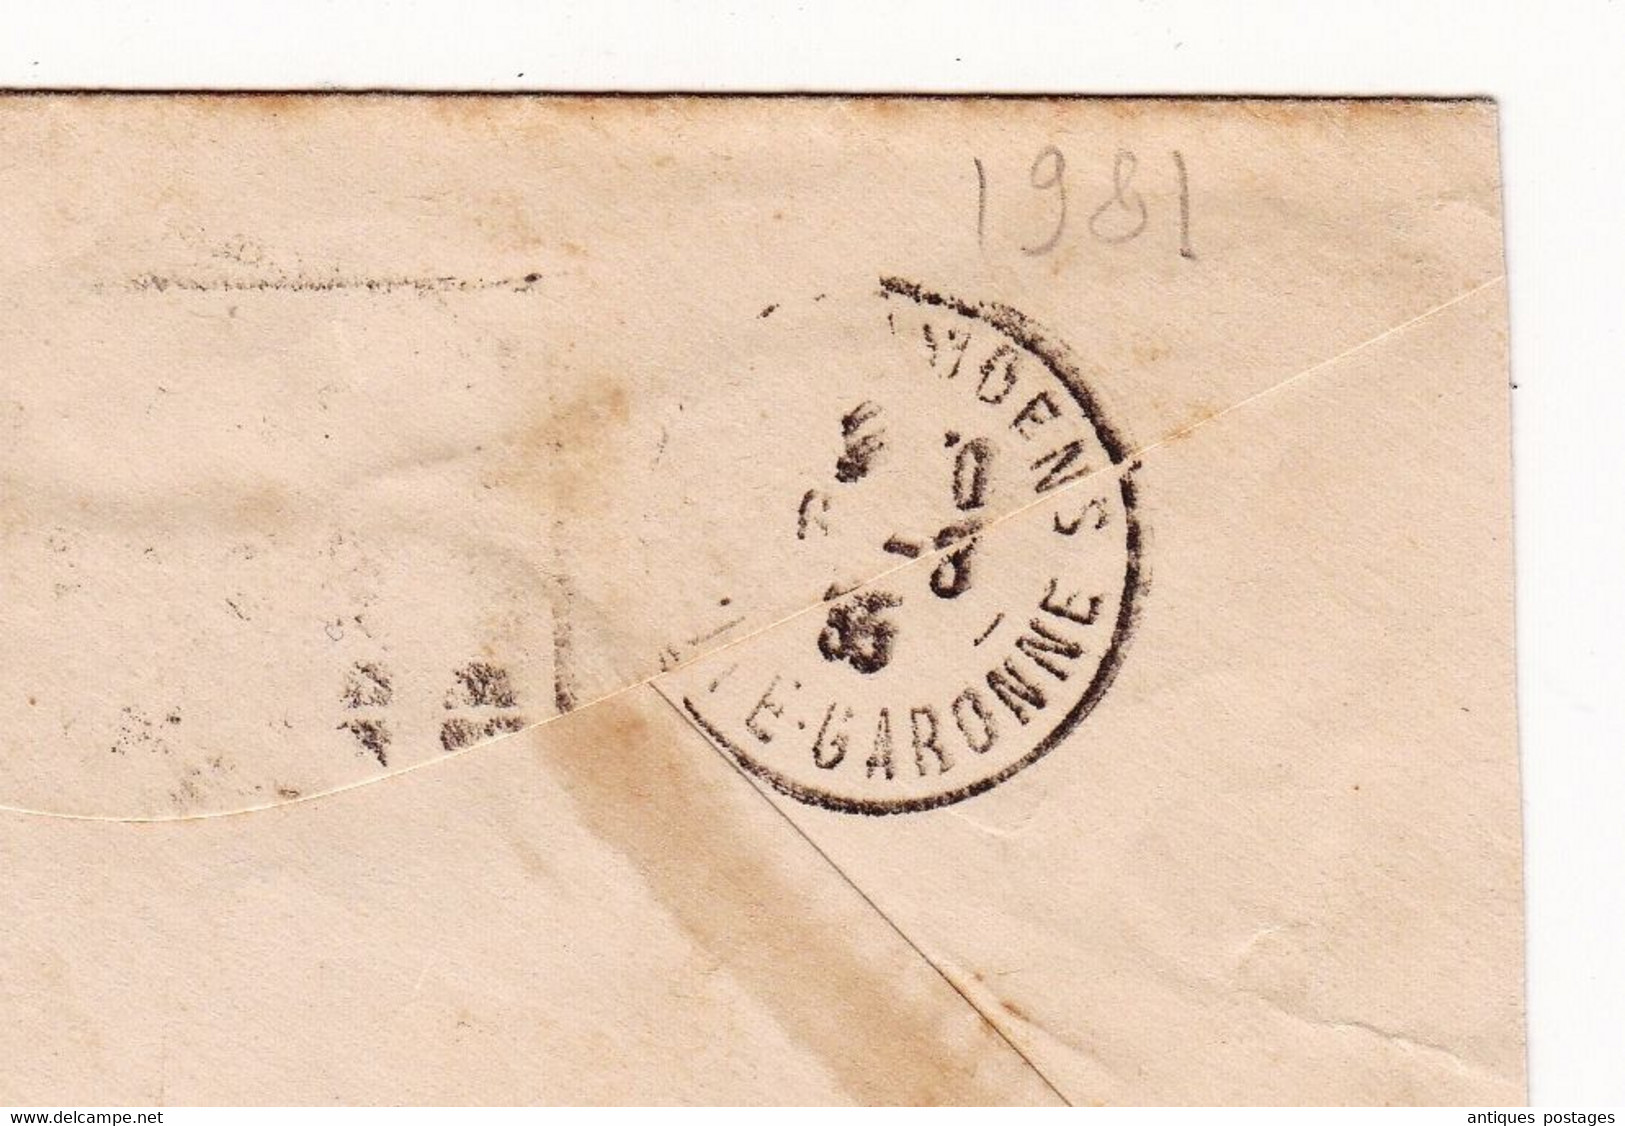 Canada Entier Postal 1935 Bagotville Sain Gaudens Haute Garonne Dubarry Mercerie - 1903-1954 De Koningen